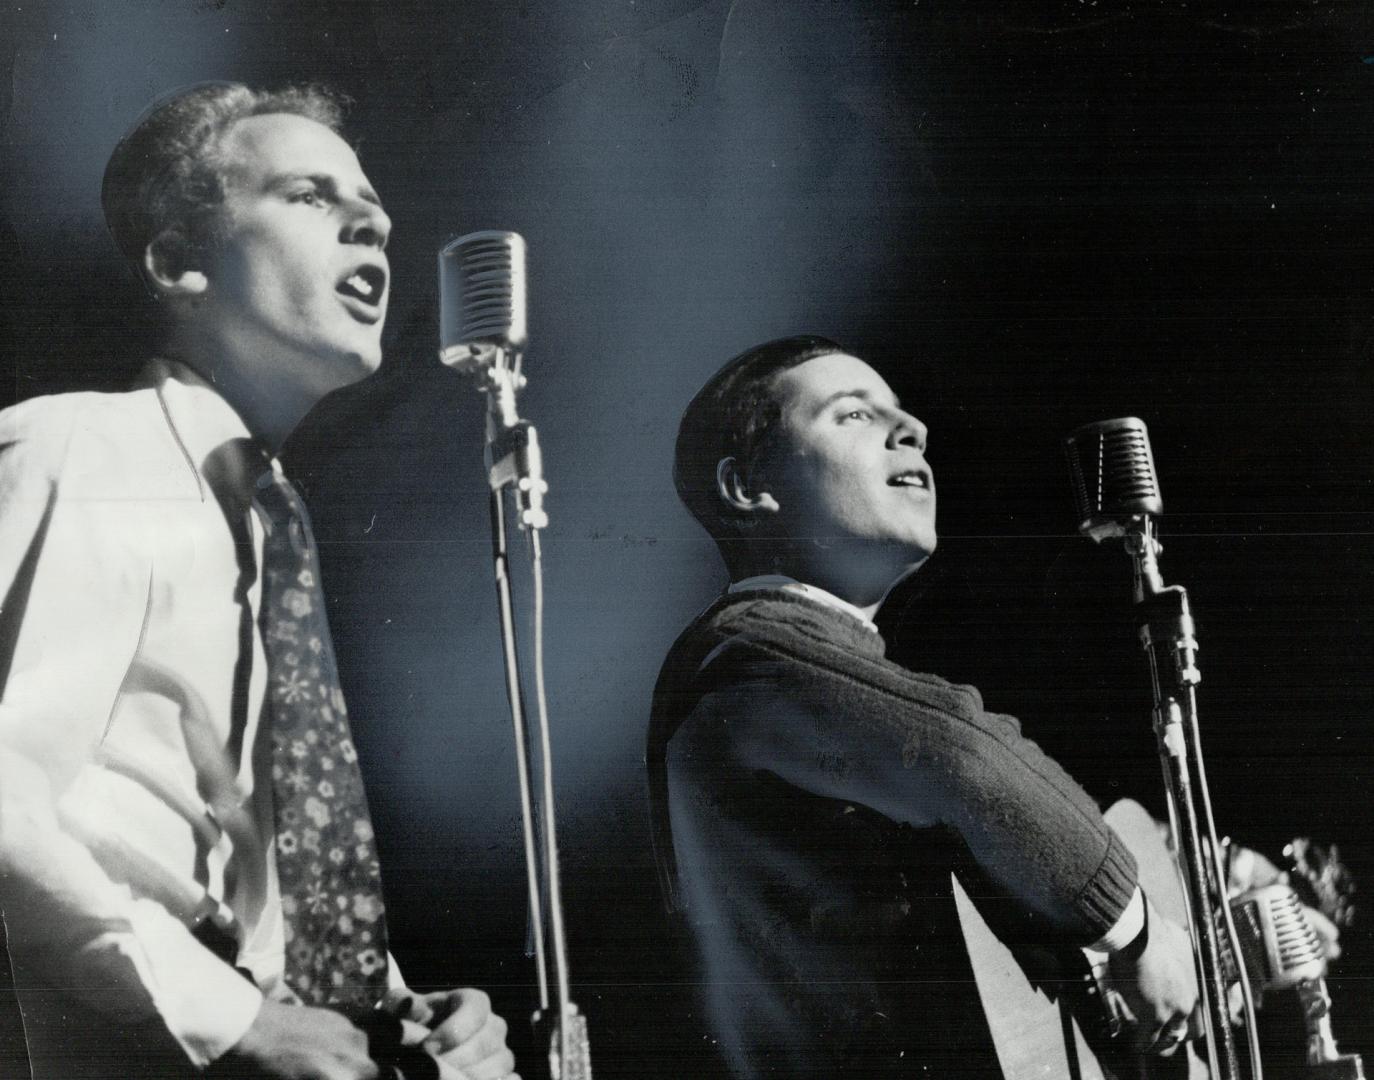 Paul Simon, Right, and Art Garfunkel at Massey Hall